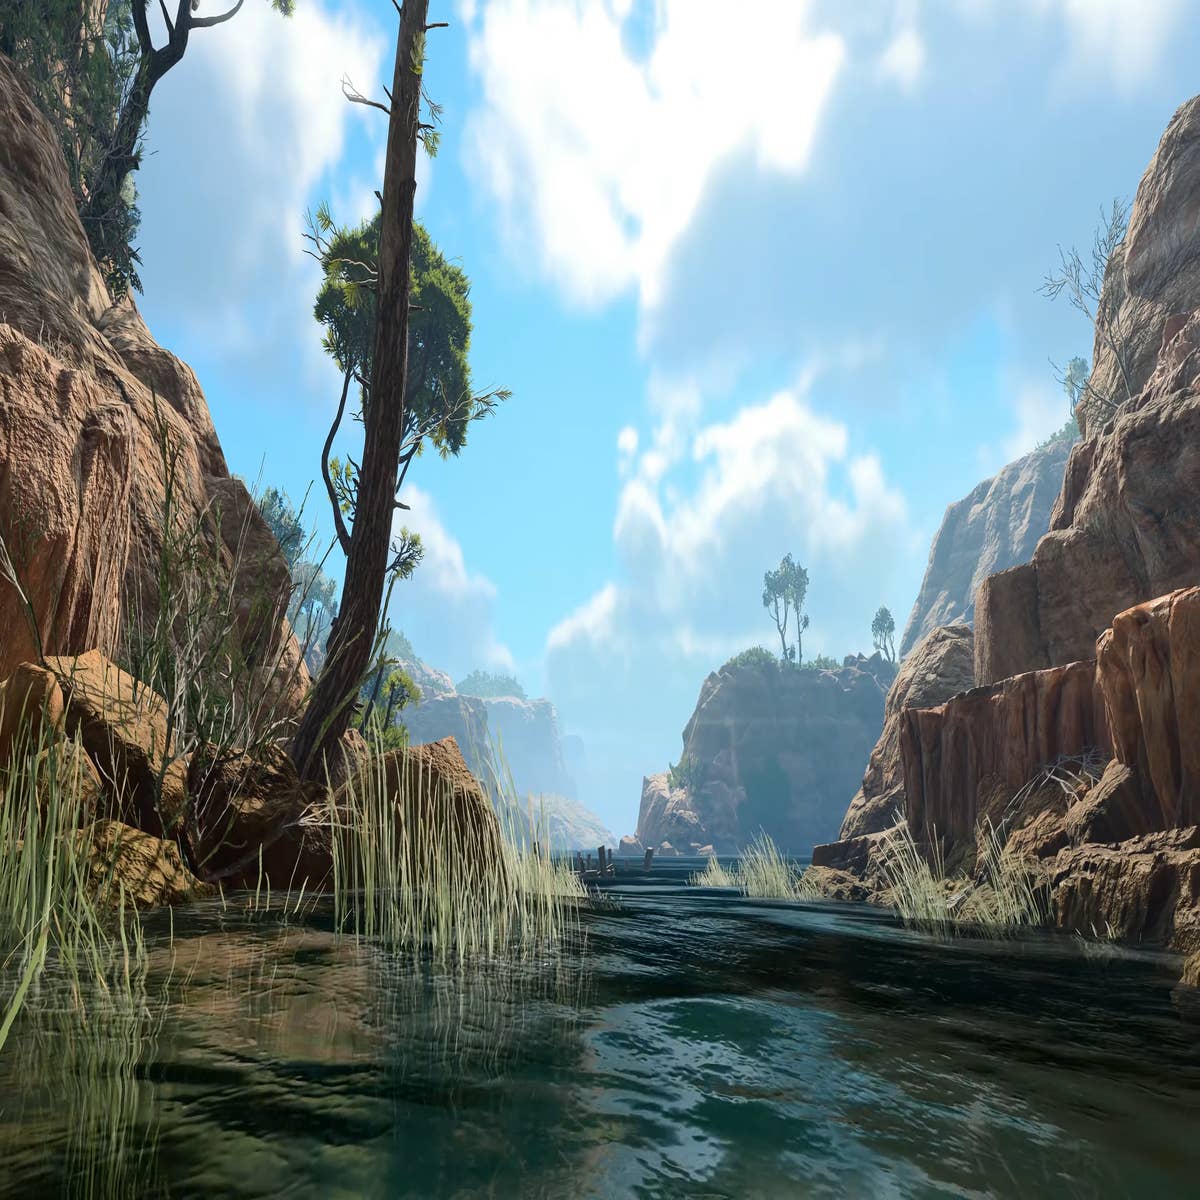 Baldur's Gate 3 Review Scores: Best PC Game Ever 